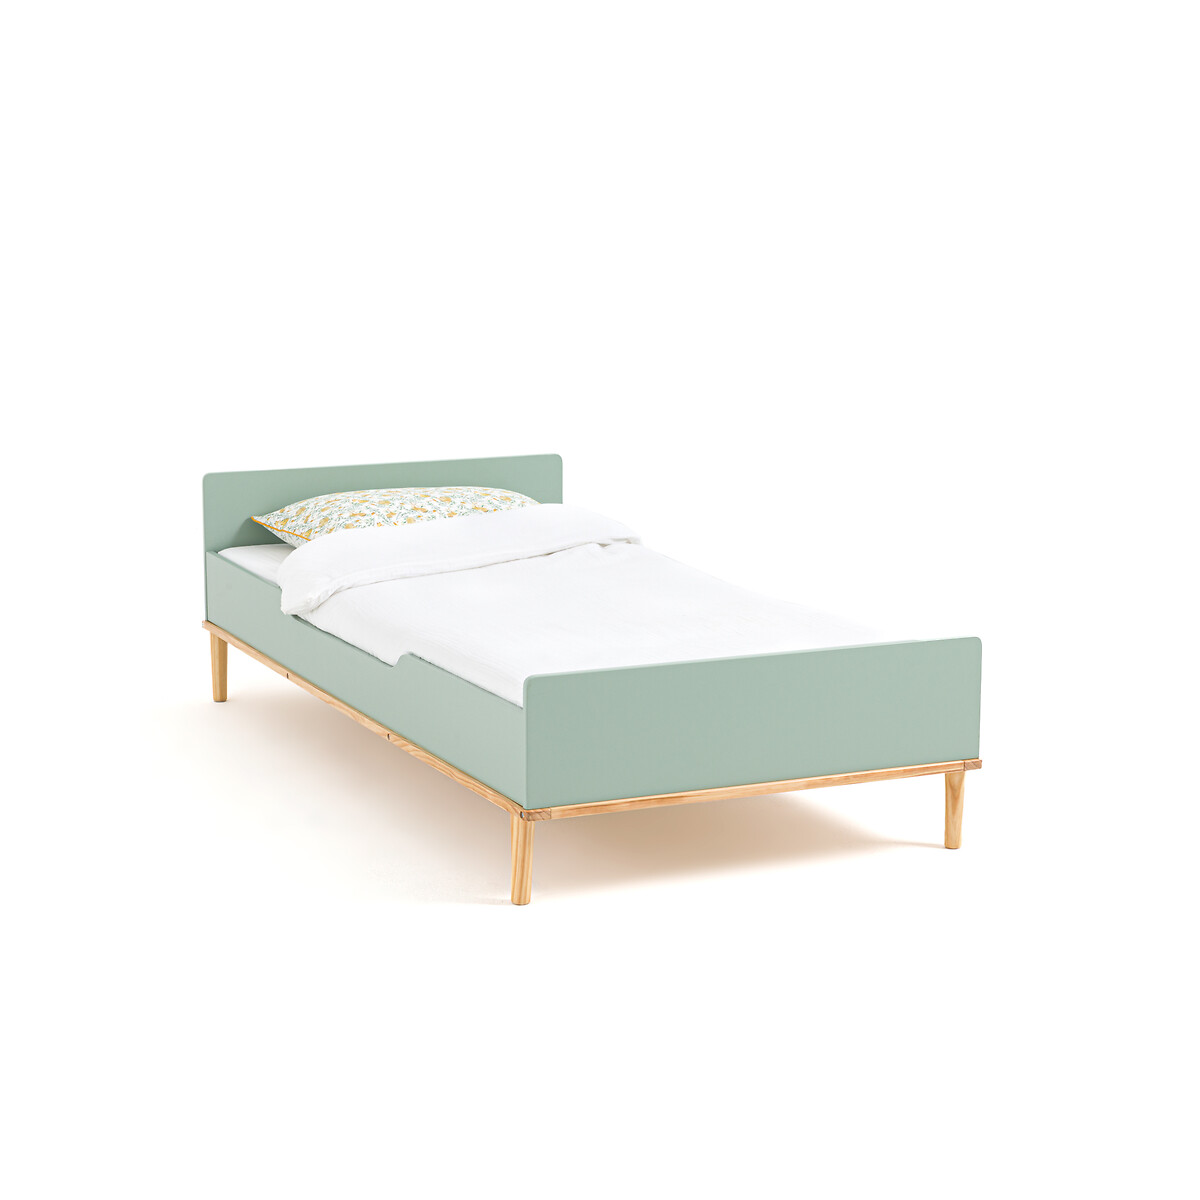 Кровать детская JIMI 90 x 190 см зеленый диван кровать детская jimi 90 x 190 см белый